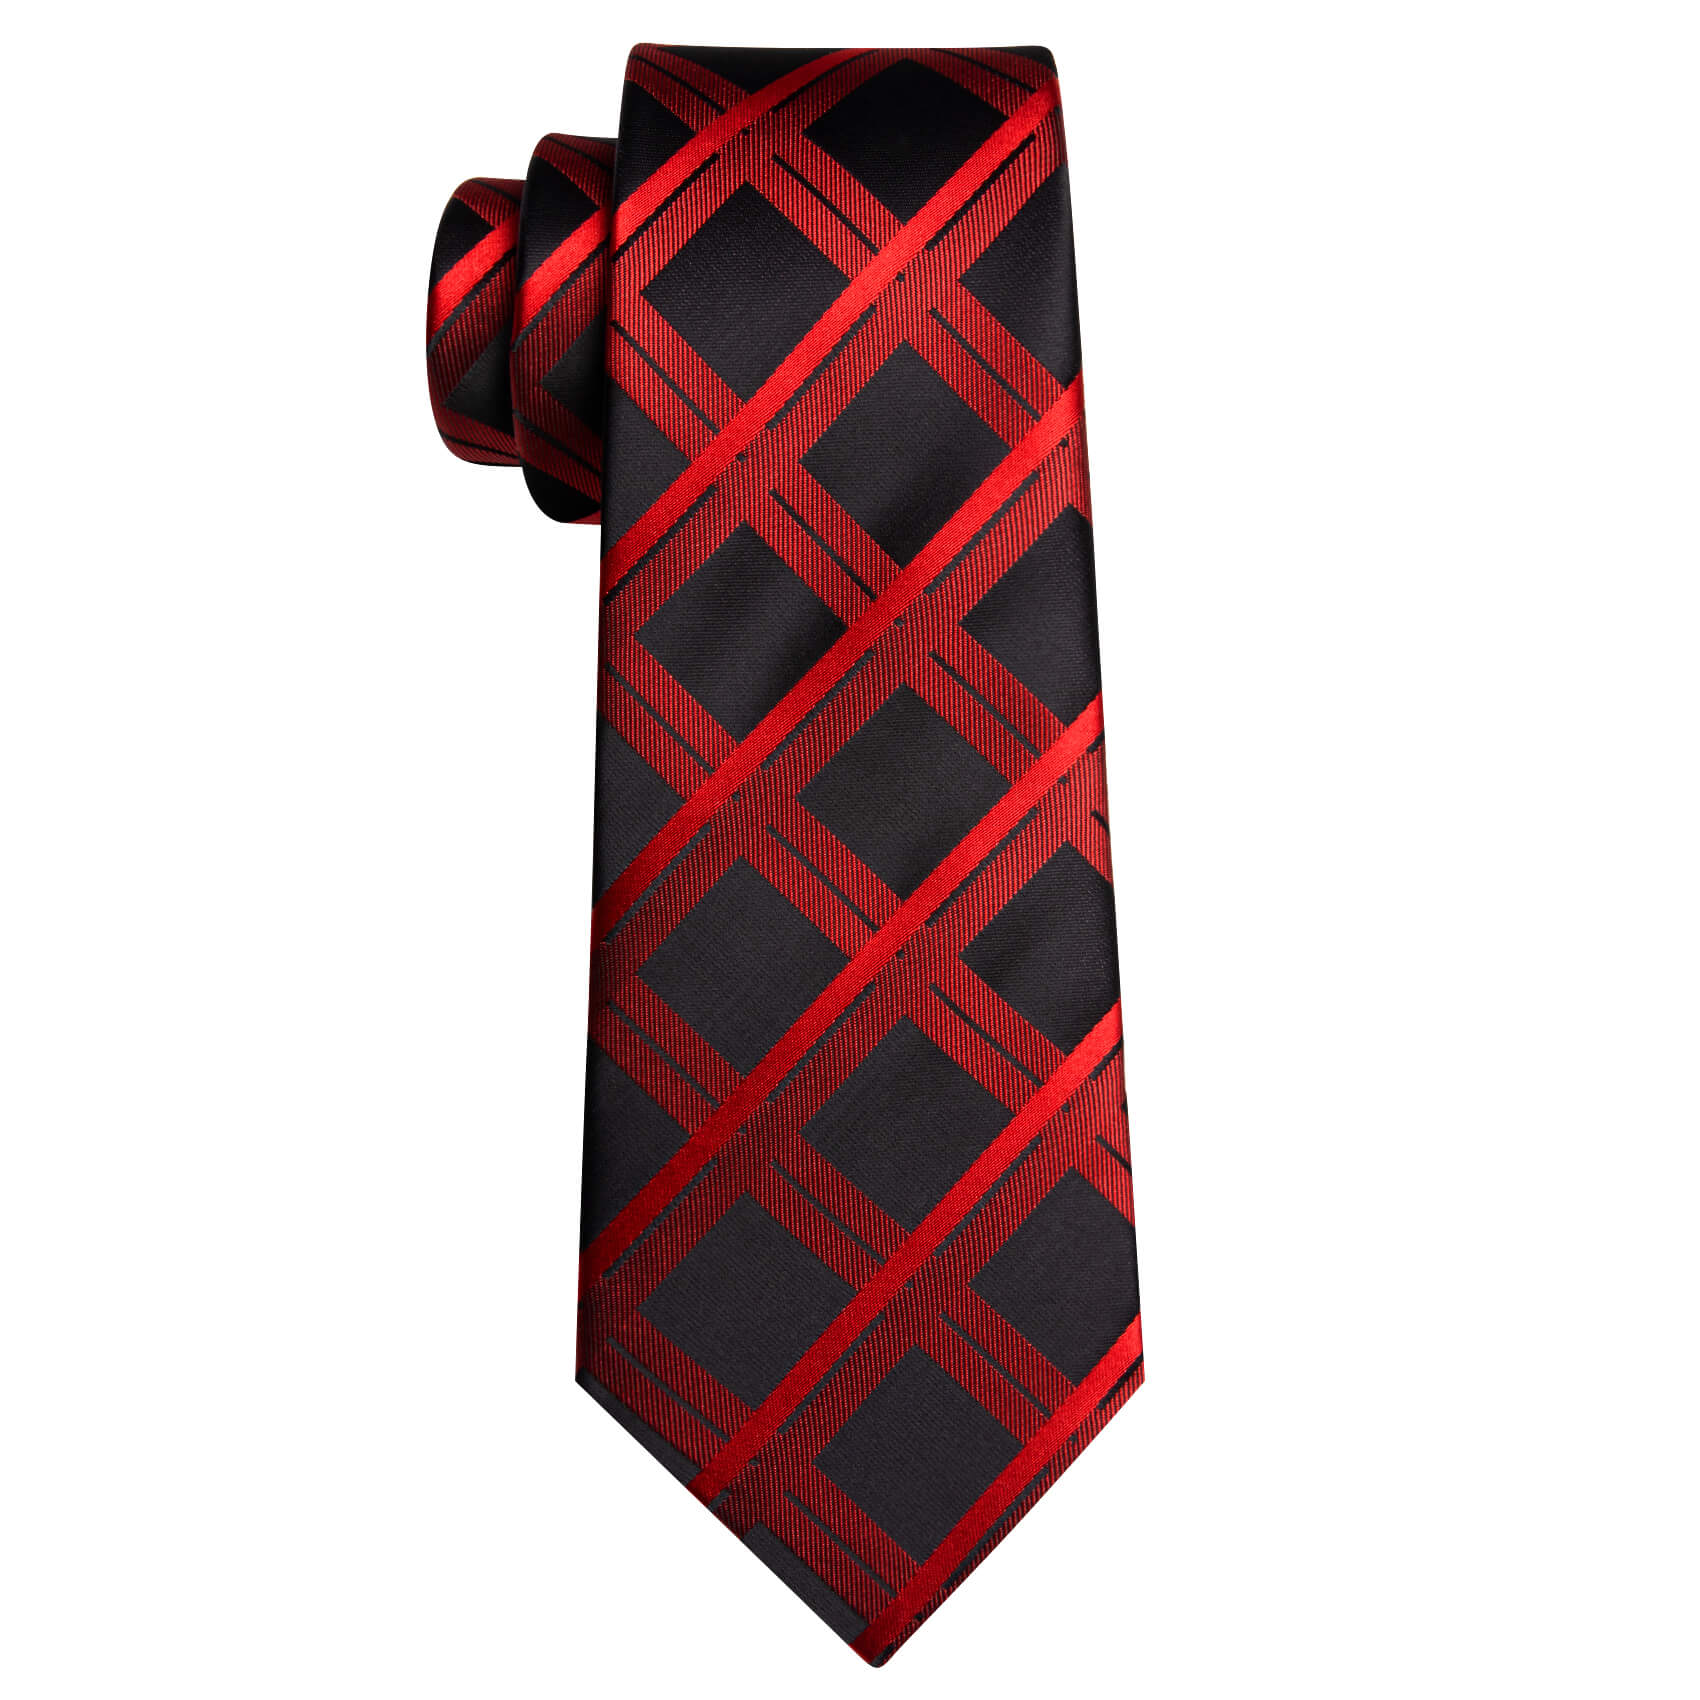 Barry.wang Plaid Tie Black Orange Red Silk Tie Hanky Cufflinks Set for Men Classic